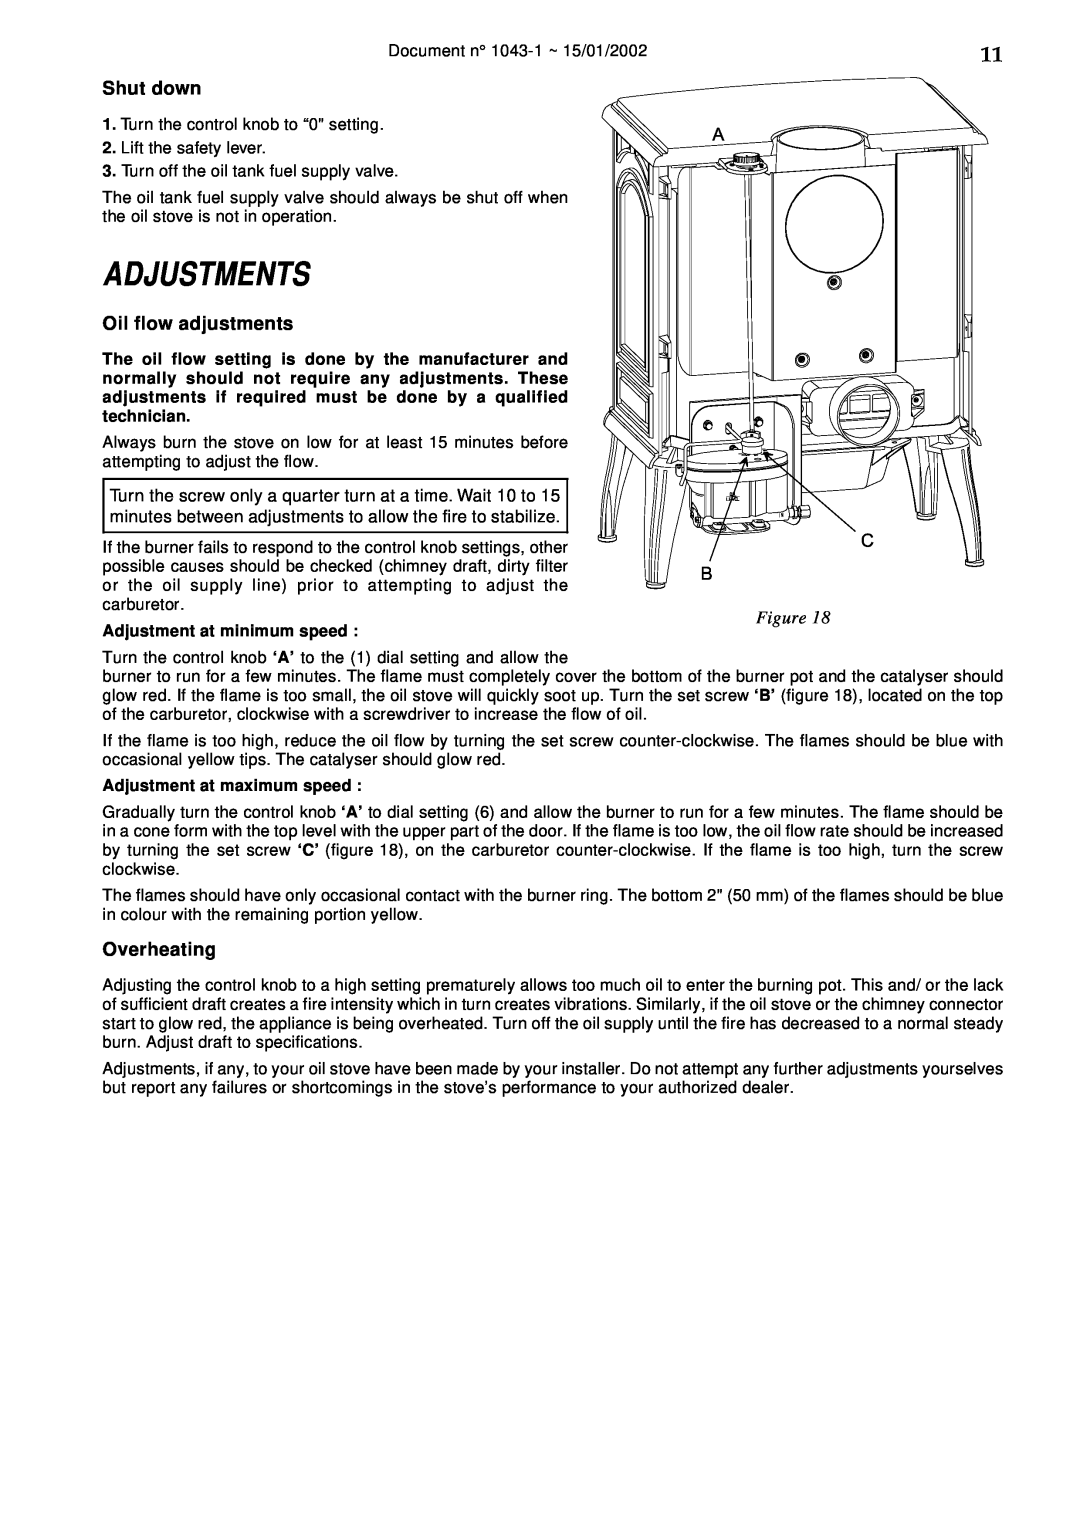 Napoleon Fireplaces SAVOY OS11 manual Adjustments, Shut down, Oil flow adjustments, Overheating, A C B 